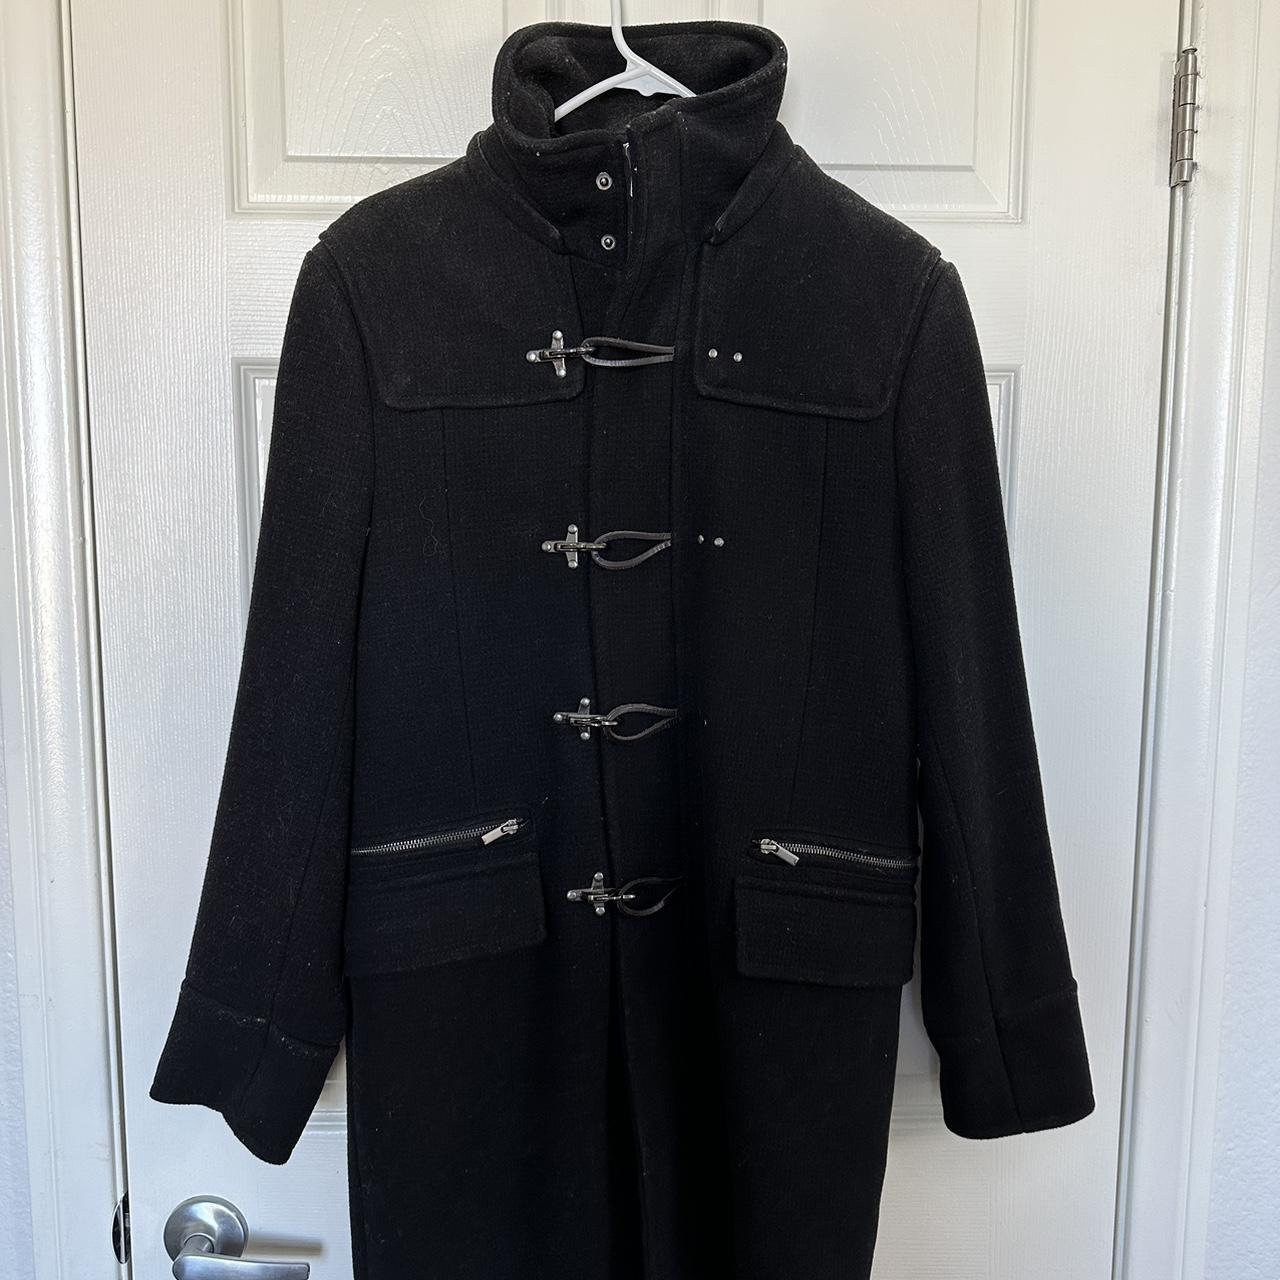 Zara Black Long Coat - Depop